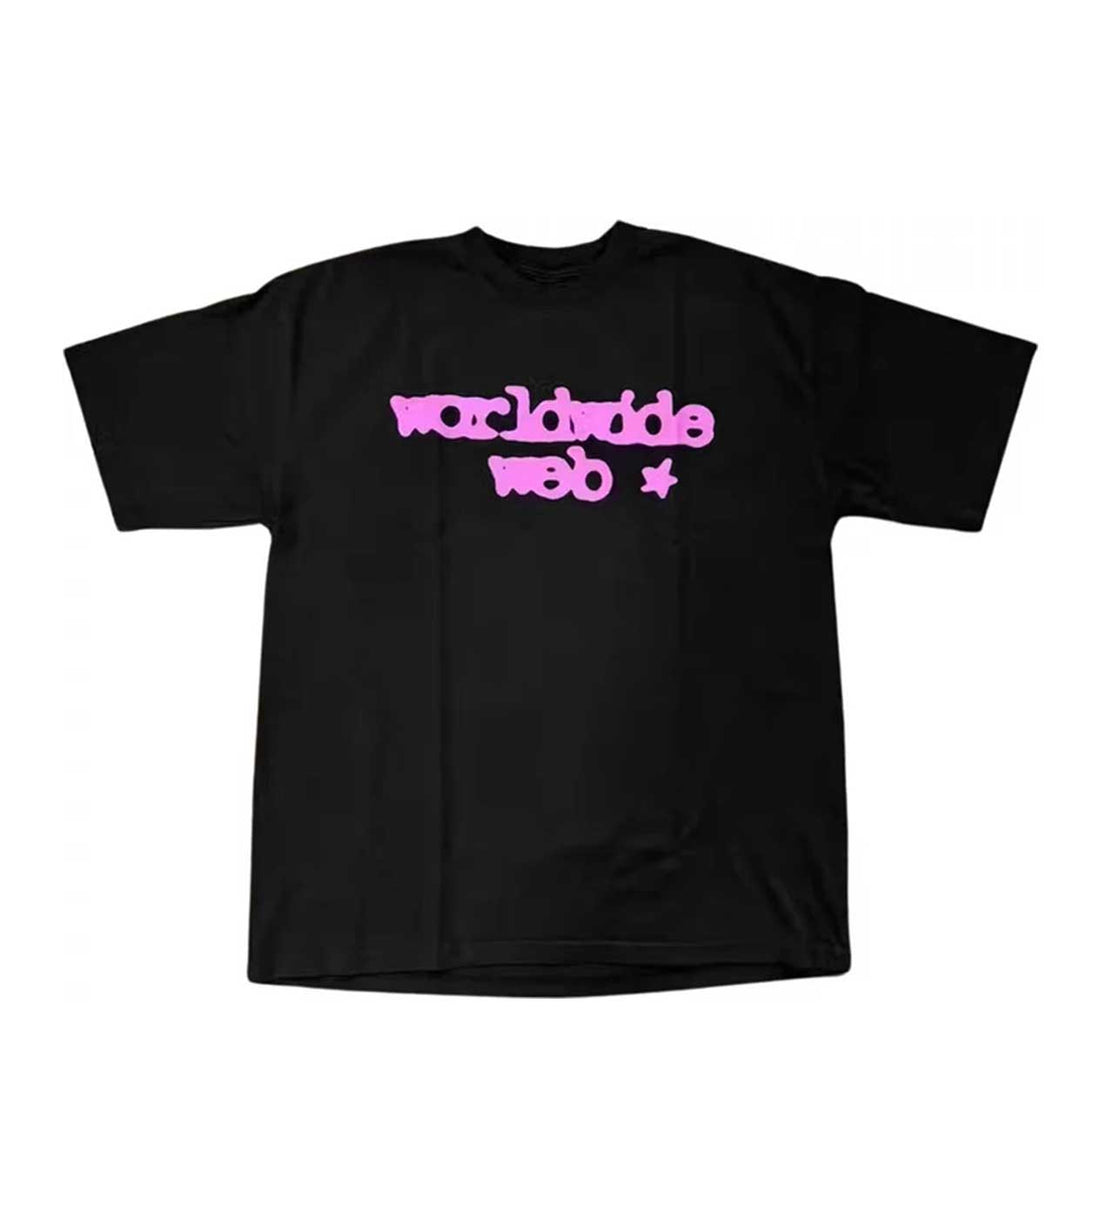 Sp5der WorldWide Web Black/Purple Tee front